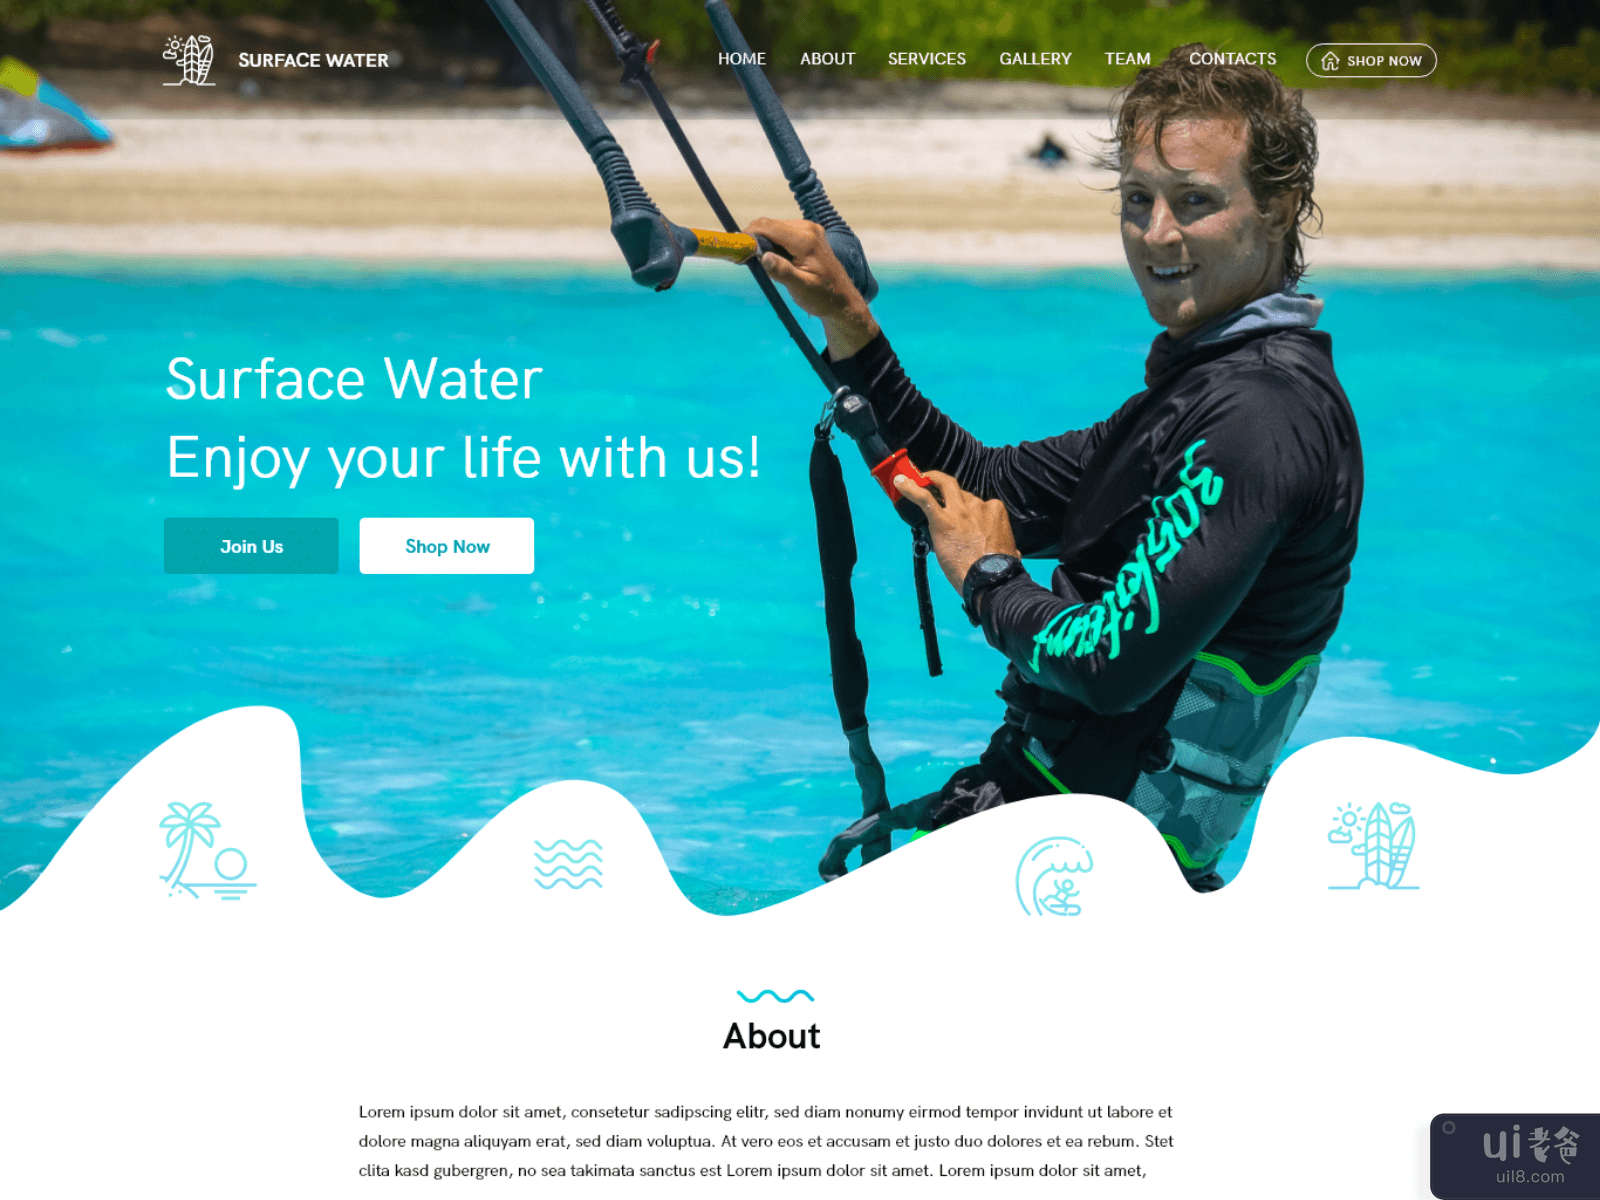 水上冲浪 - 冲浪和水上运动网页模板(Water Surfing - Surfing and Water Sports Web Template)插图6